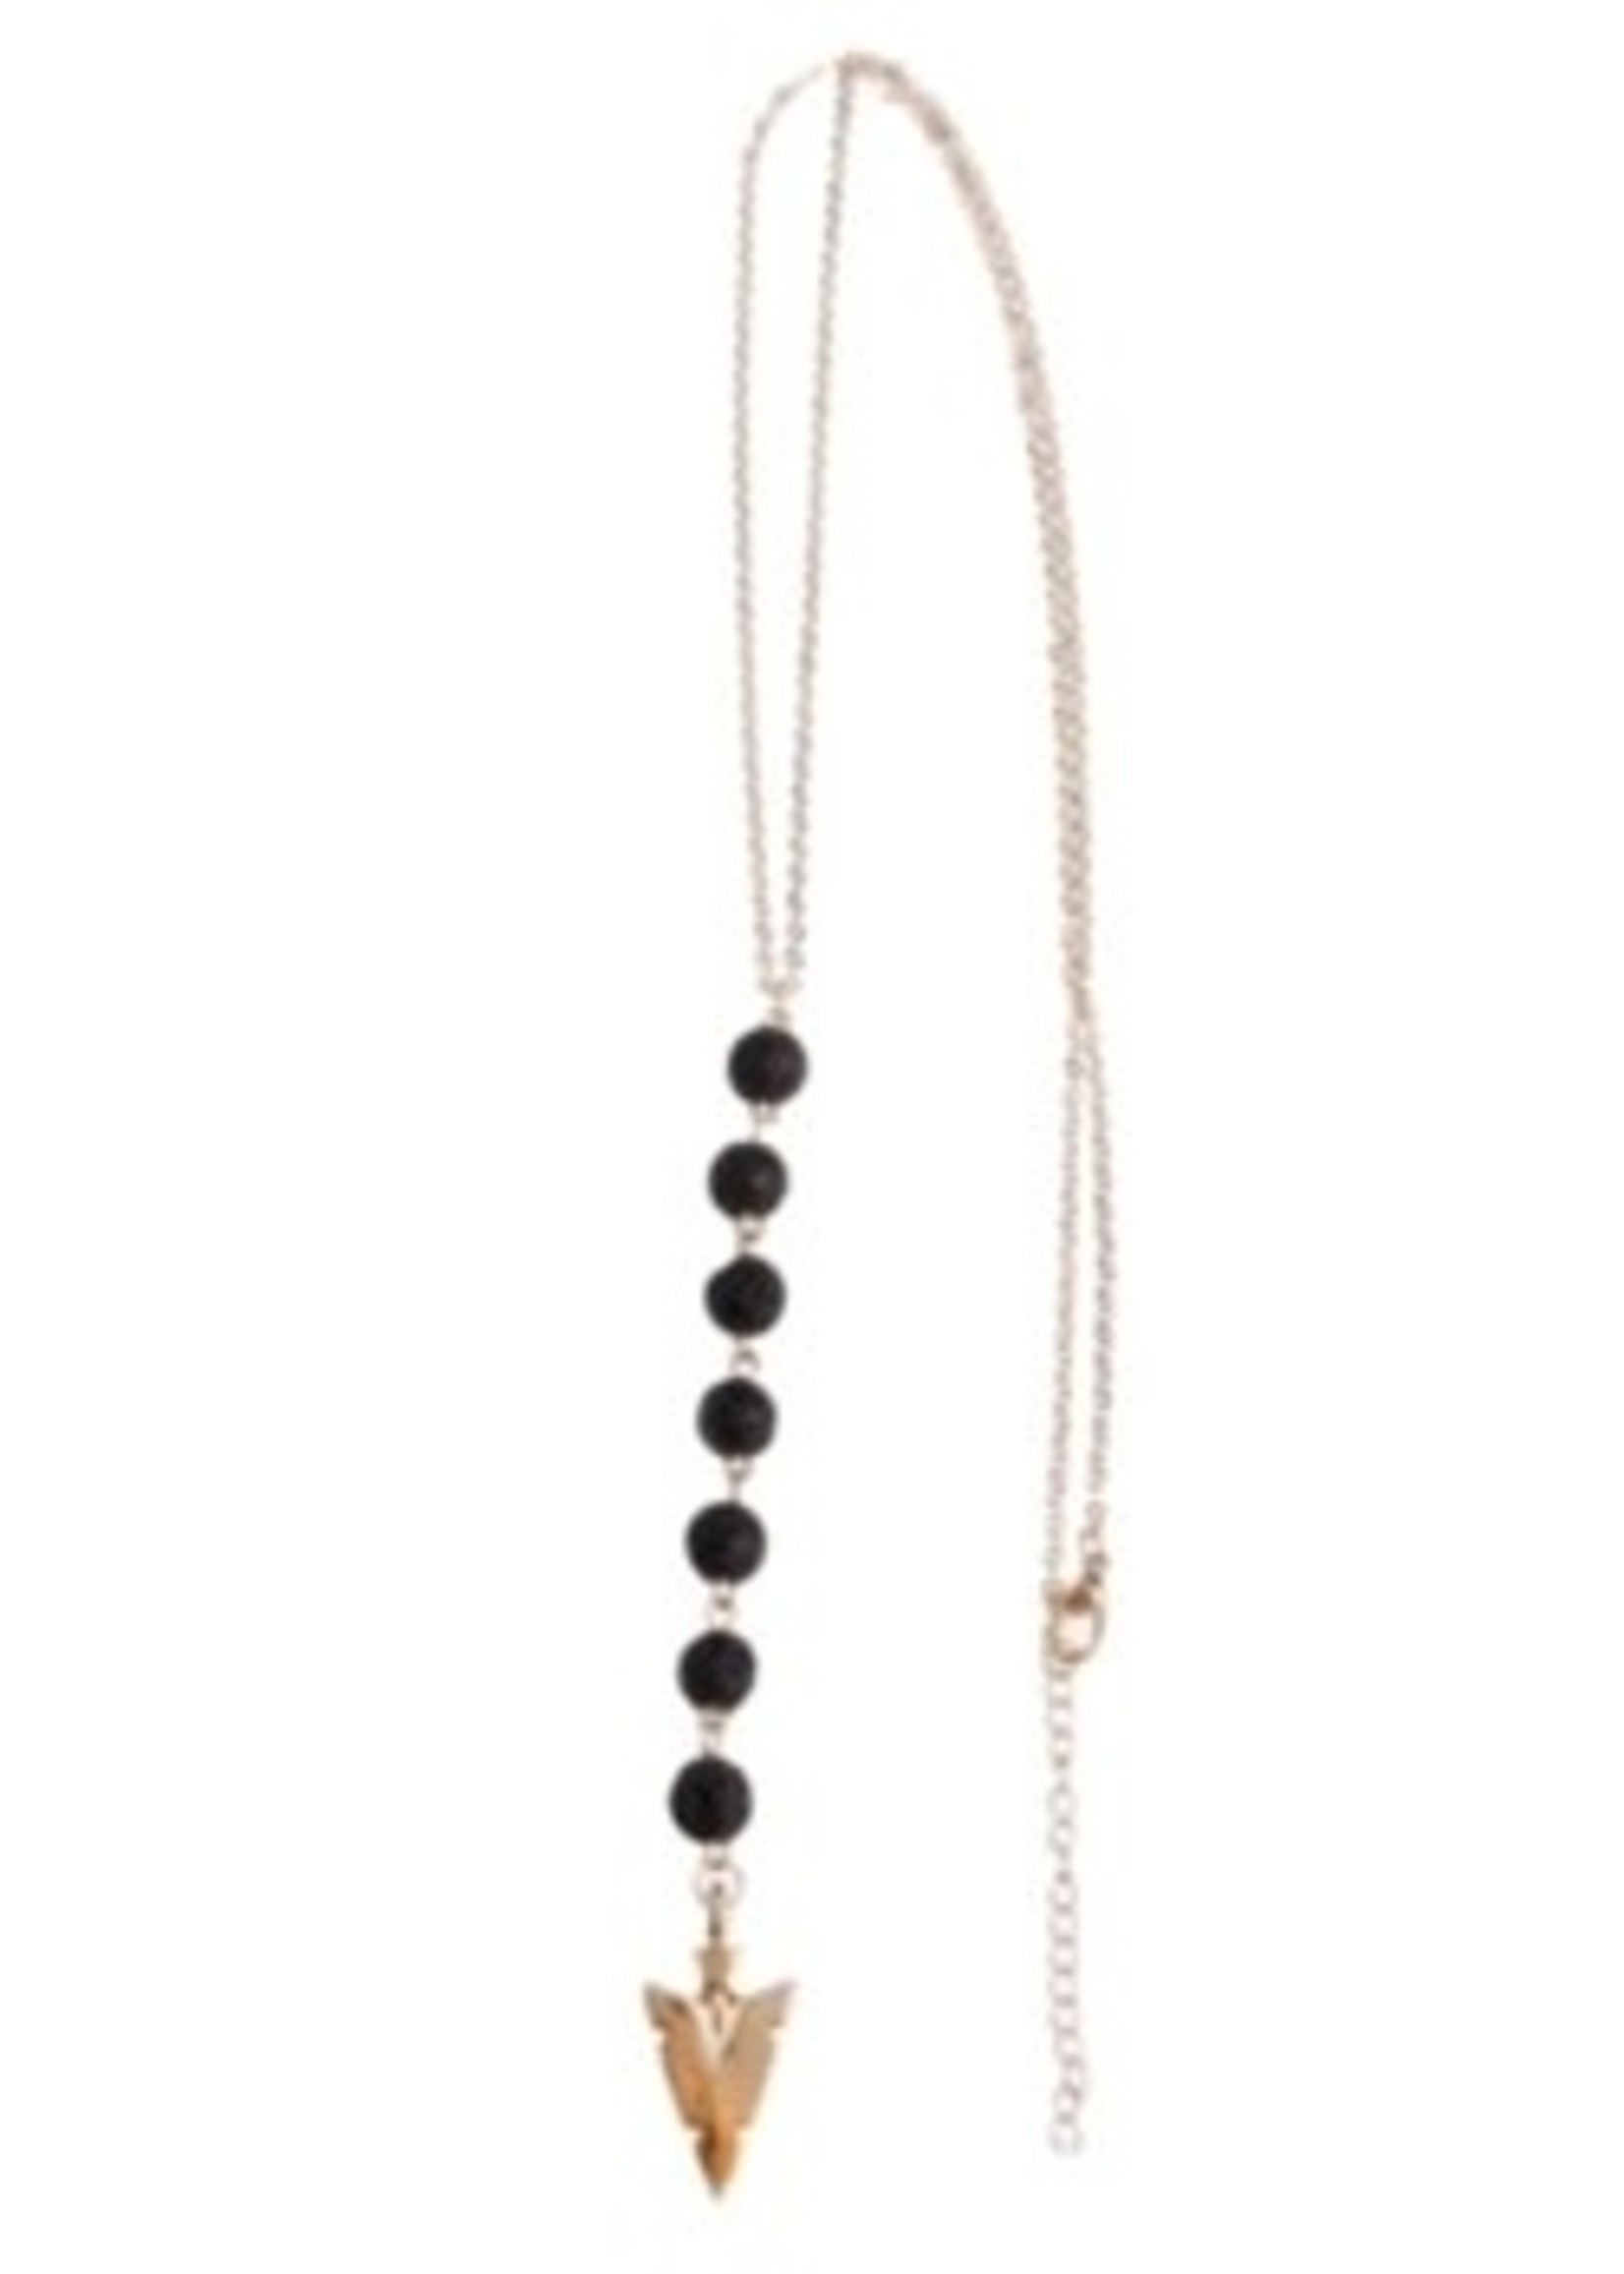 Oily Blends LLC Long Lava Bead Diffuser Necklace Gold Arrow